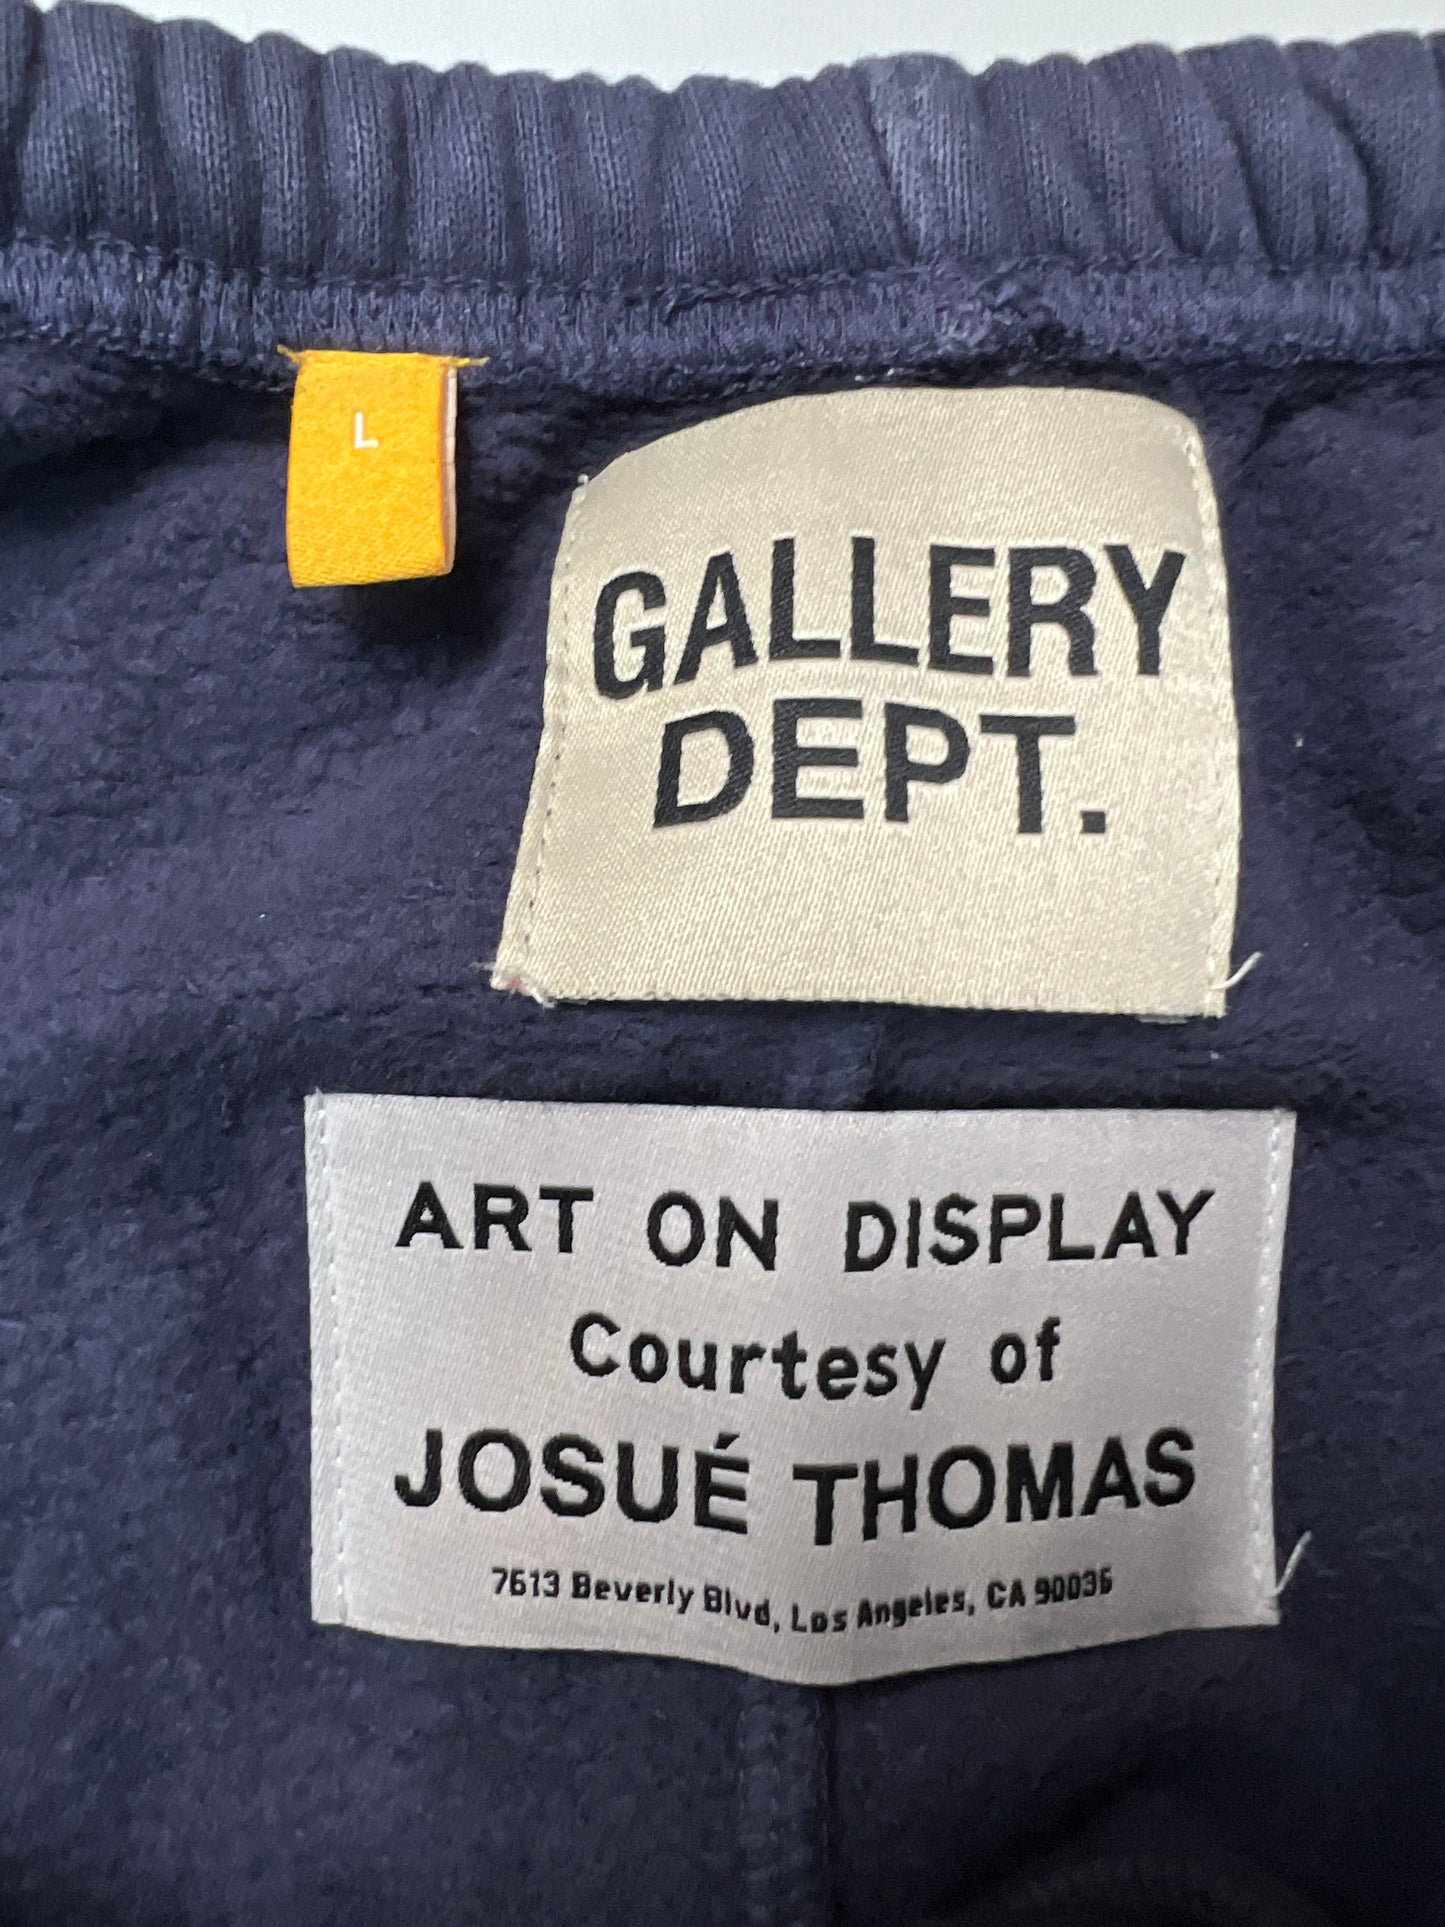 Gallery Dept. Flared reworked painter Sweatpants Purple SZ:L